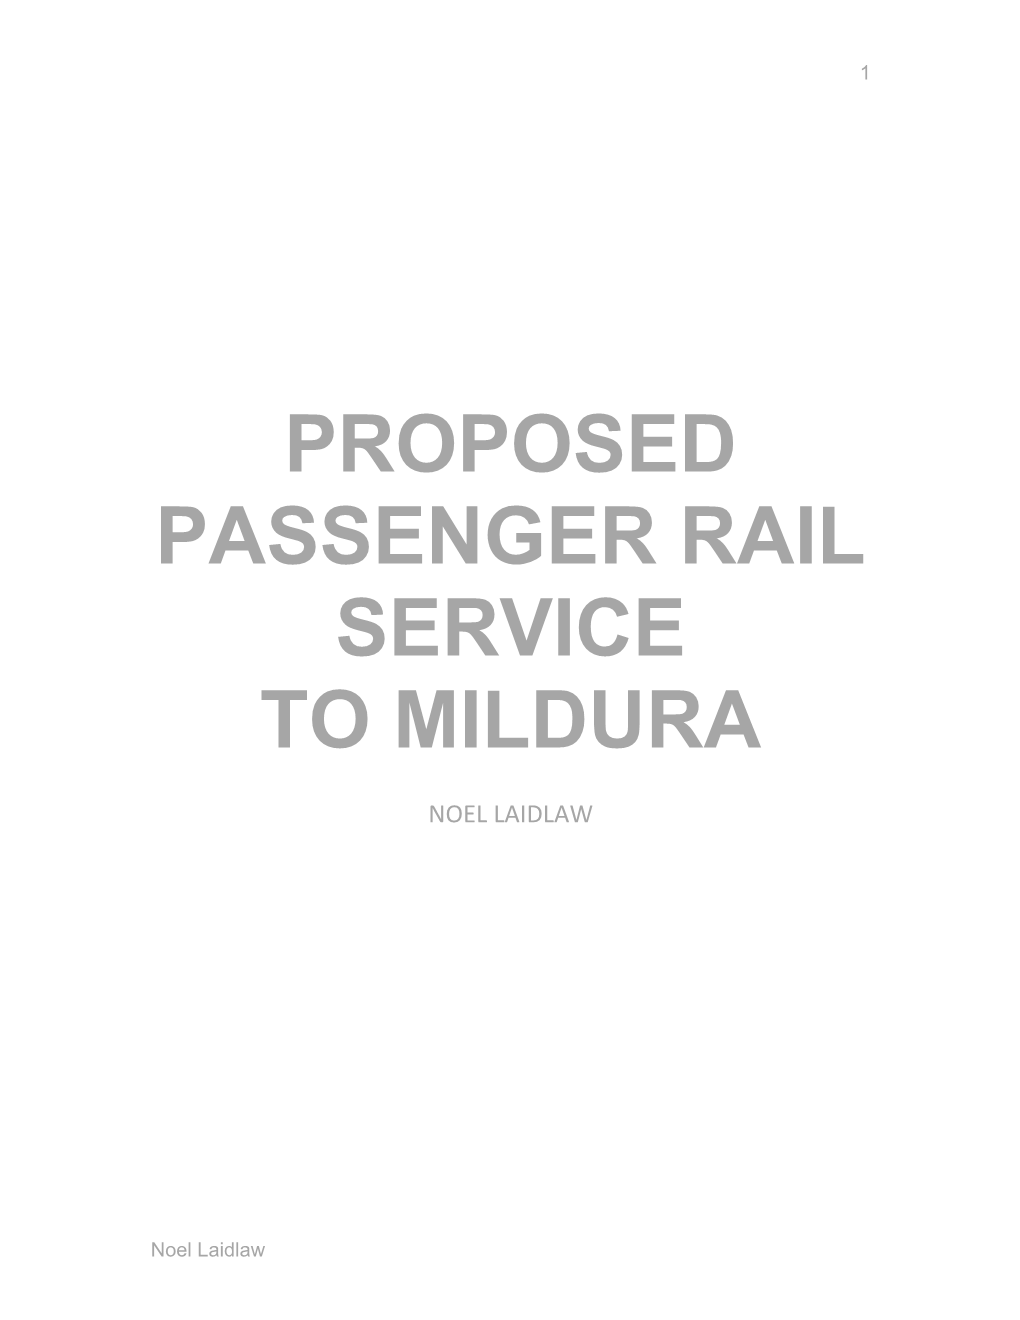 Proposed Passenger Rail Service to Mildura